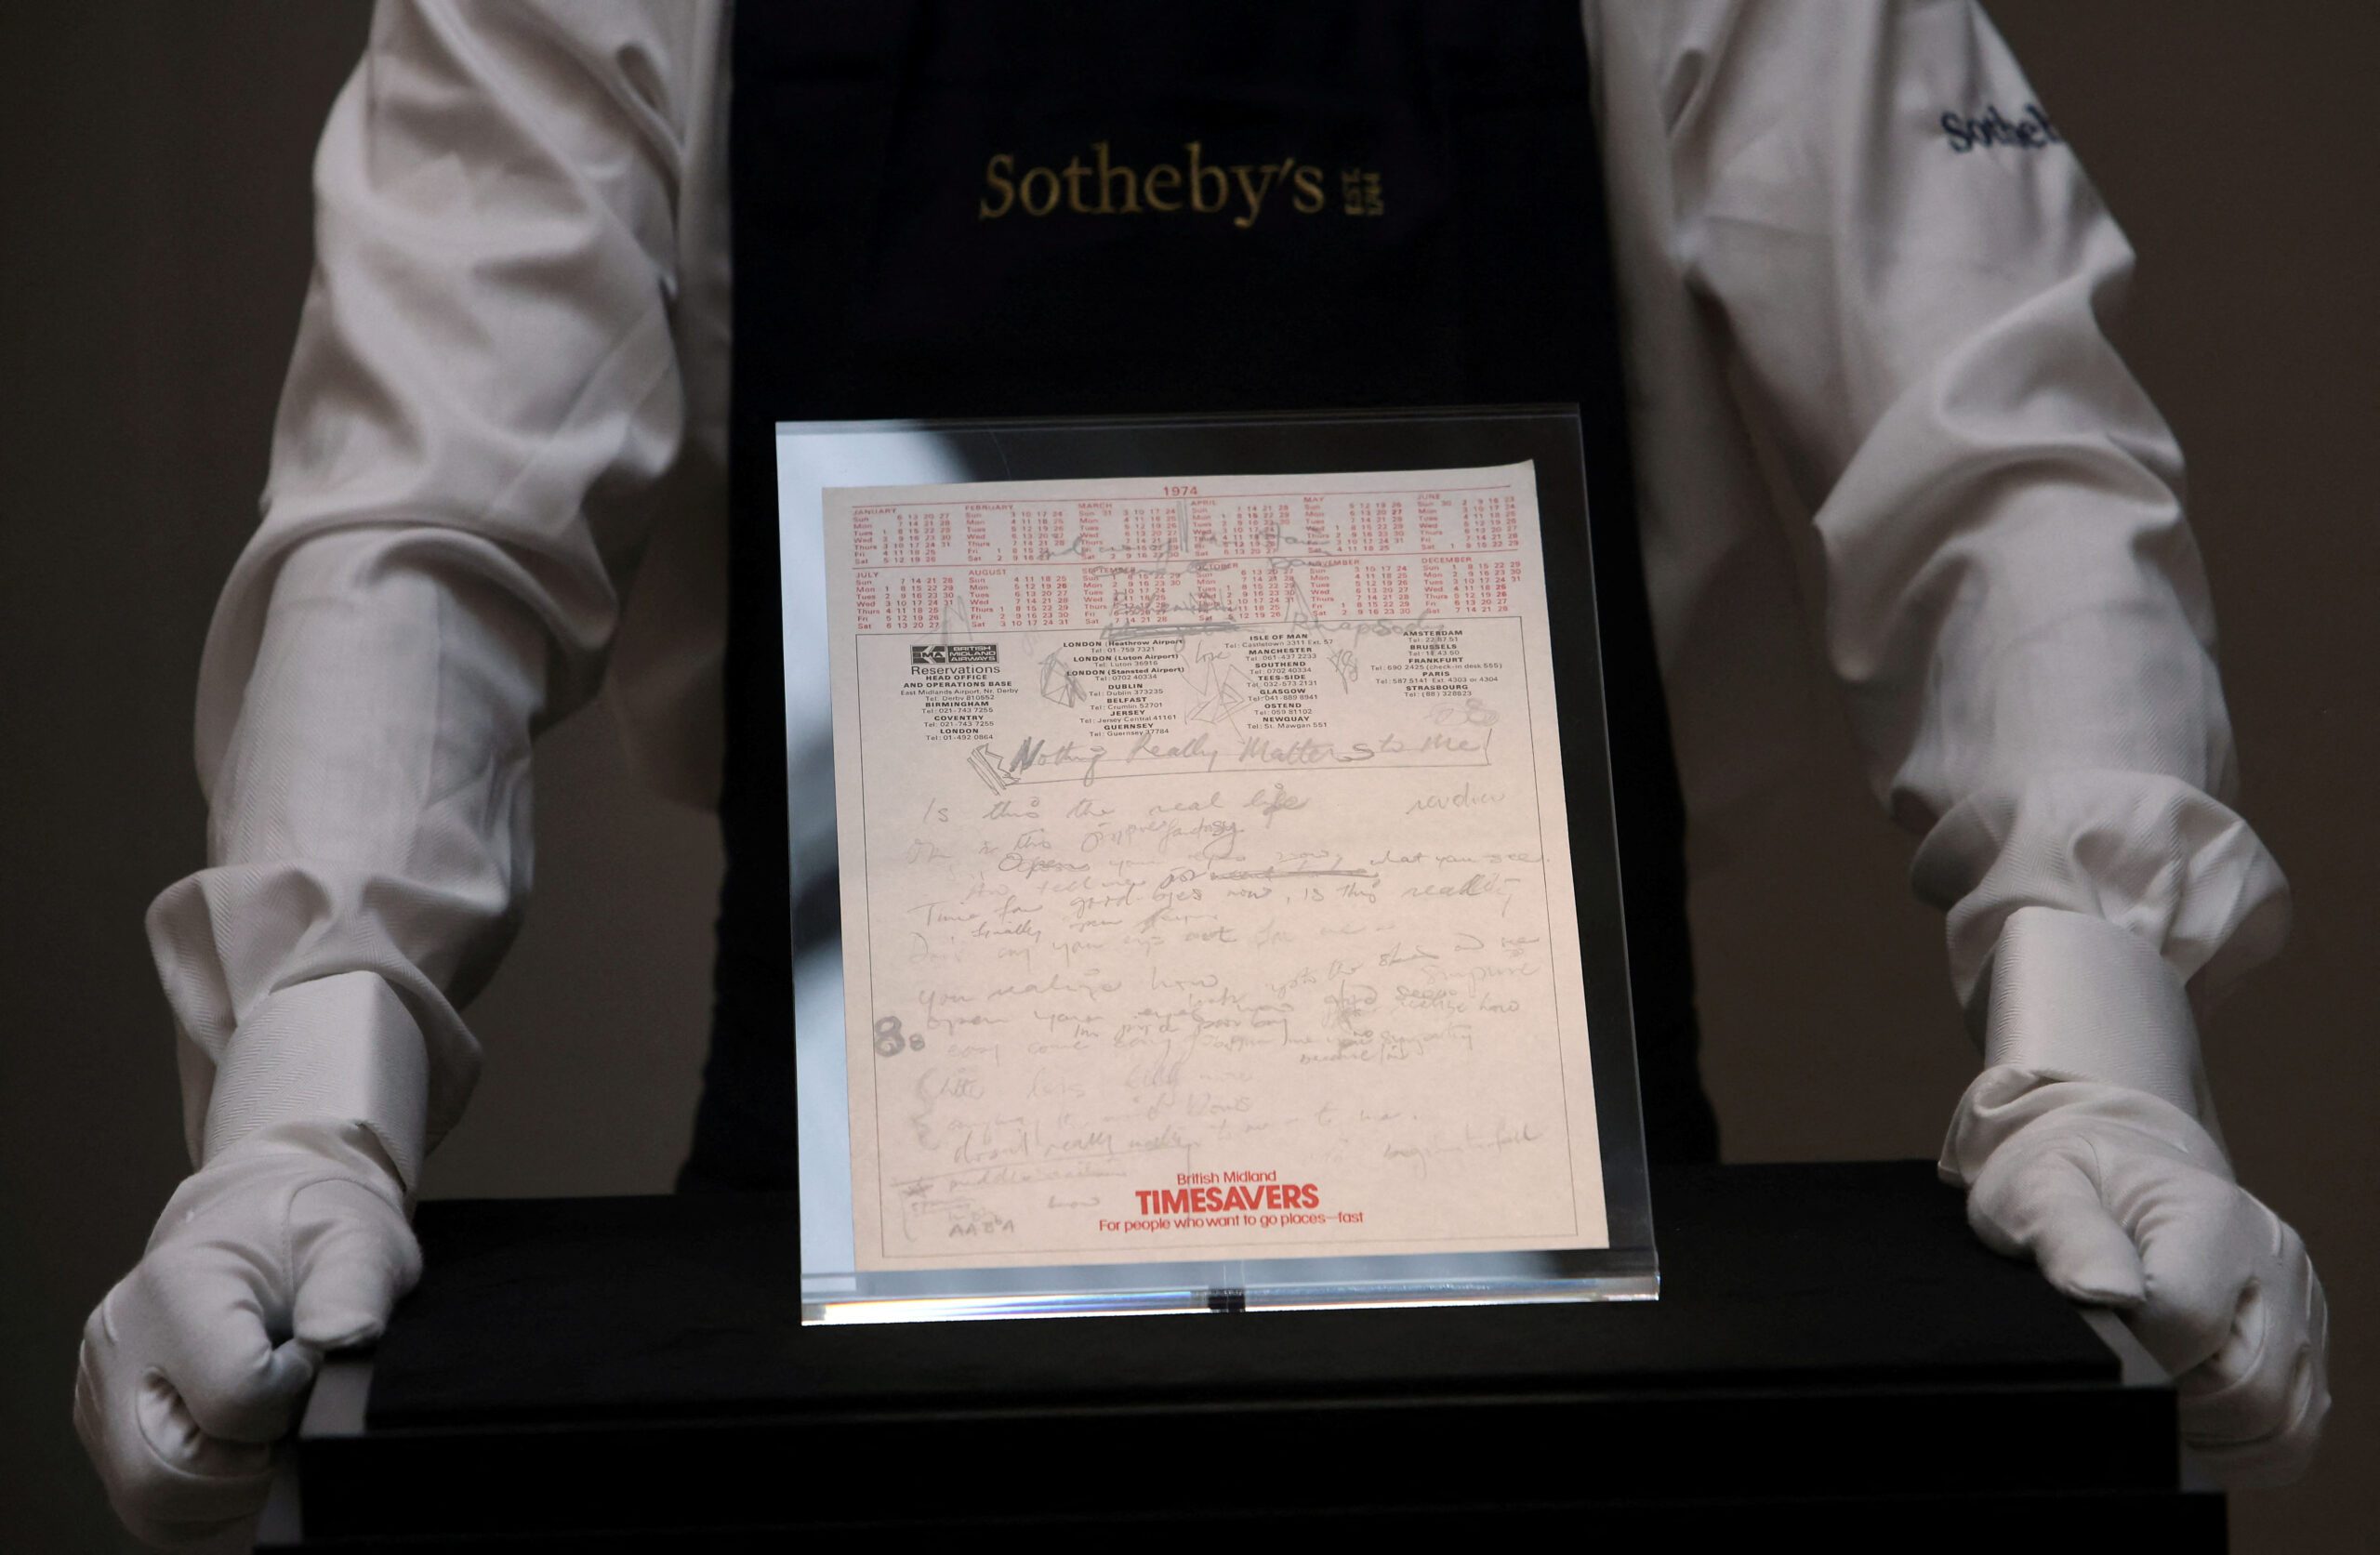 ‘Bohemian Rhapsody’ piano, Freddie Mercury belongings to be auctioned